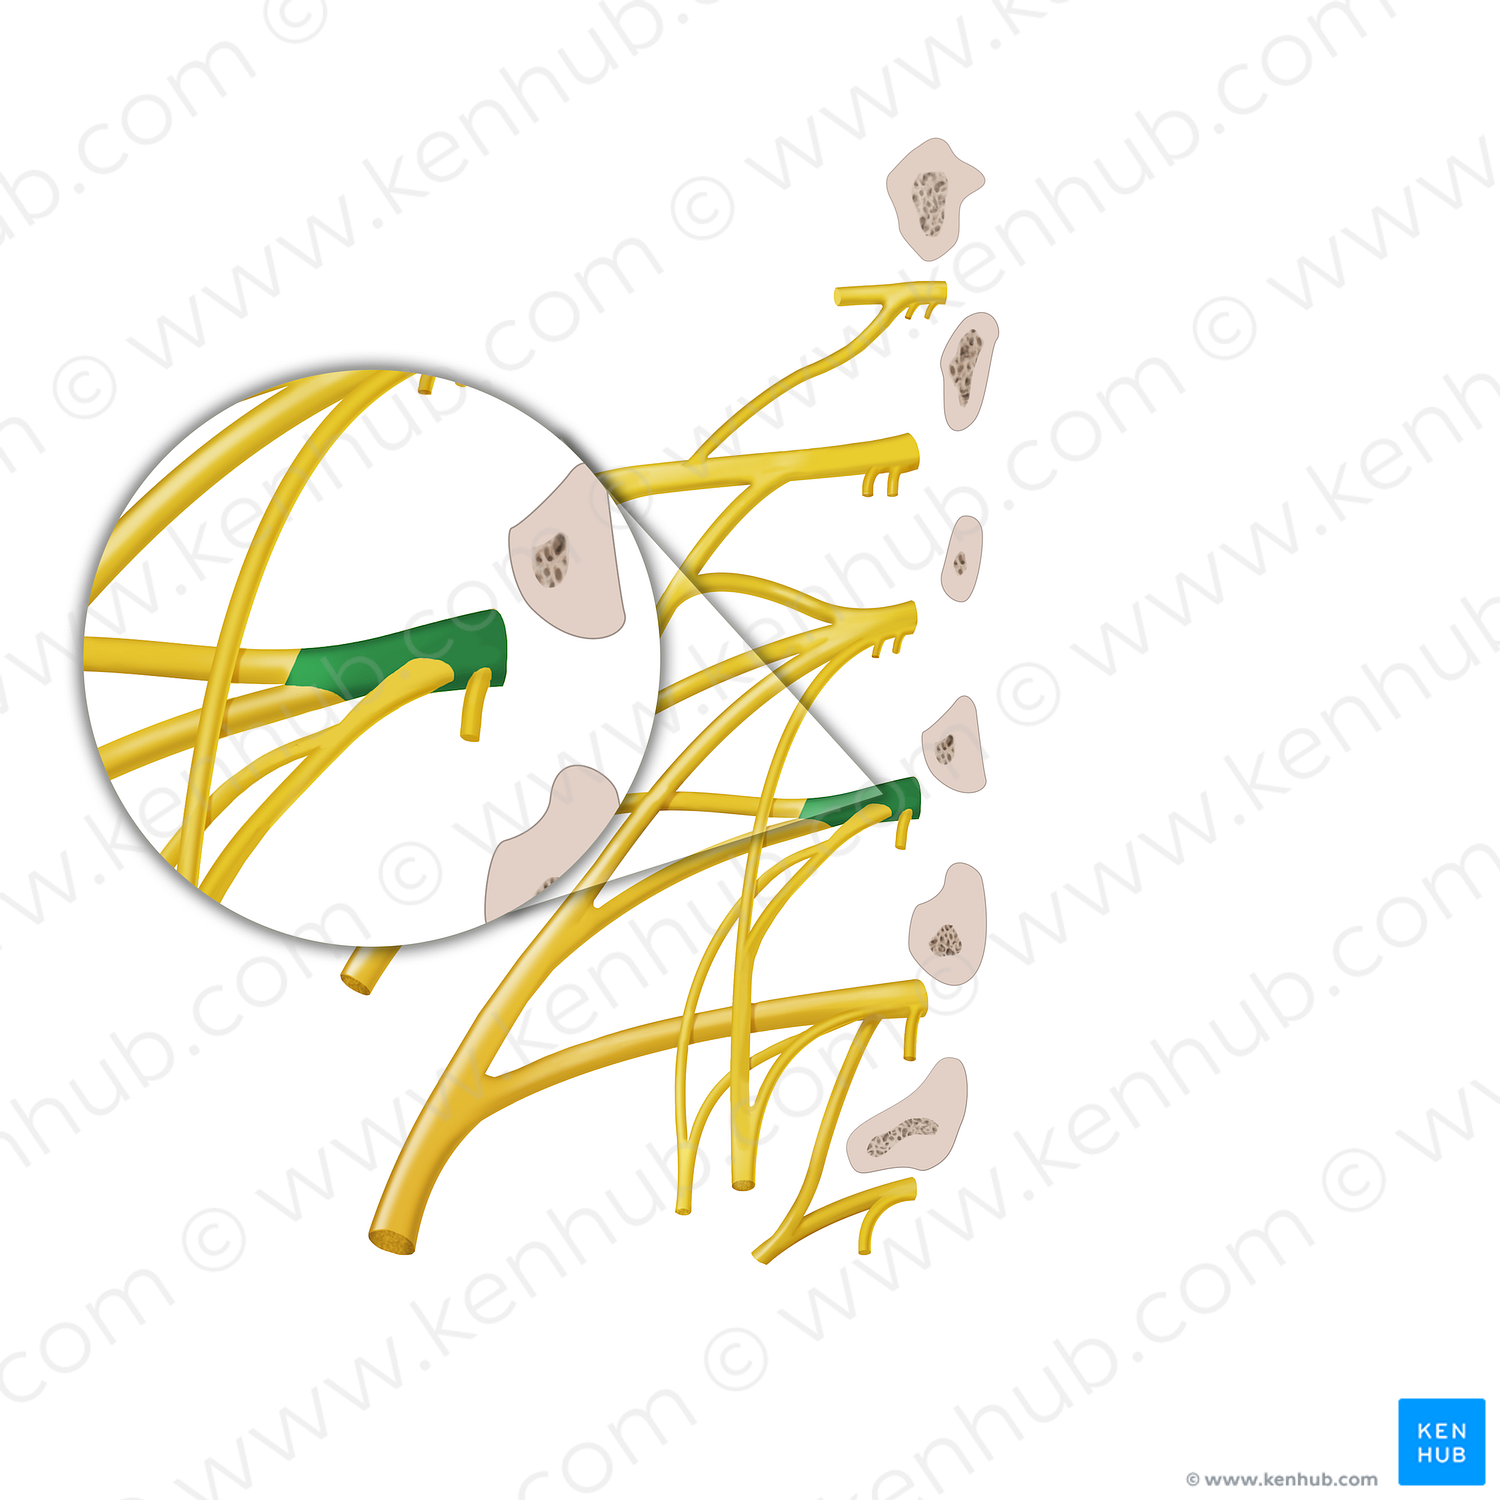 Anterior ramus of spinal nerve L3 (#12886)